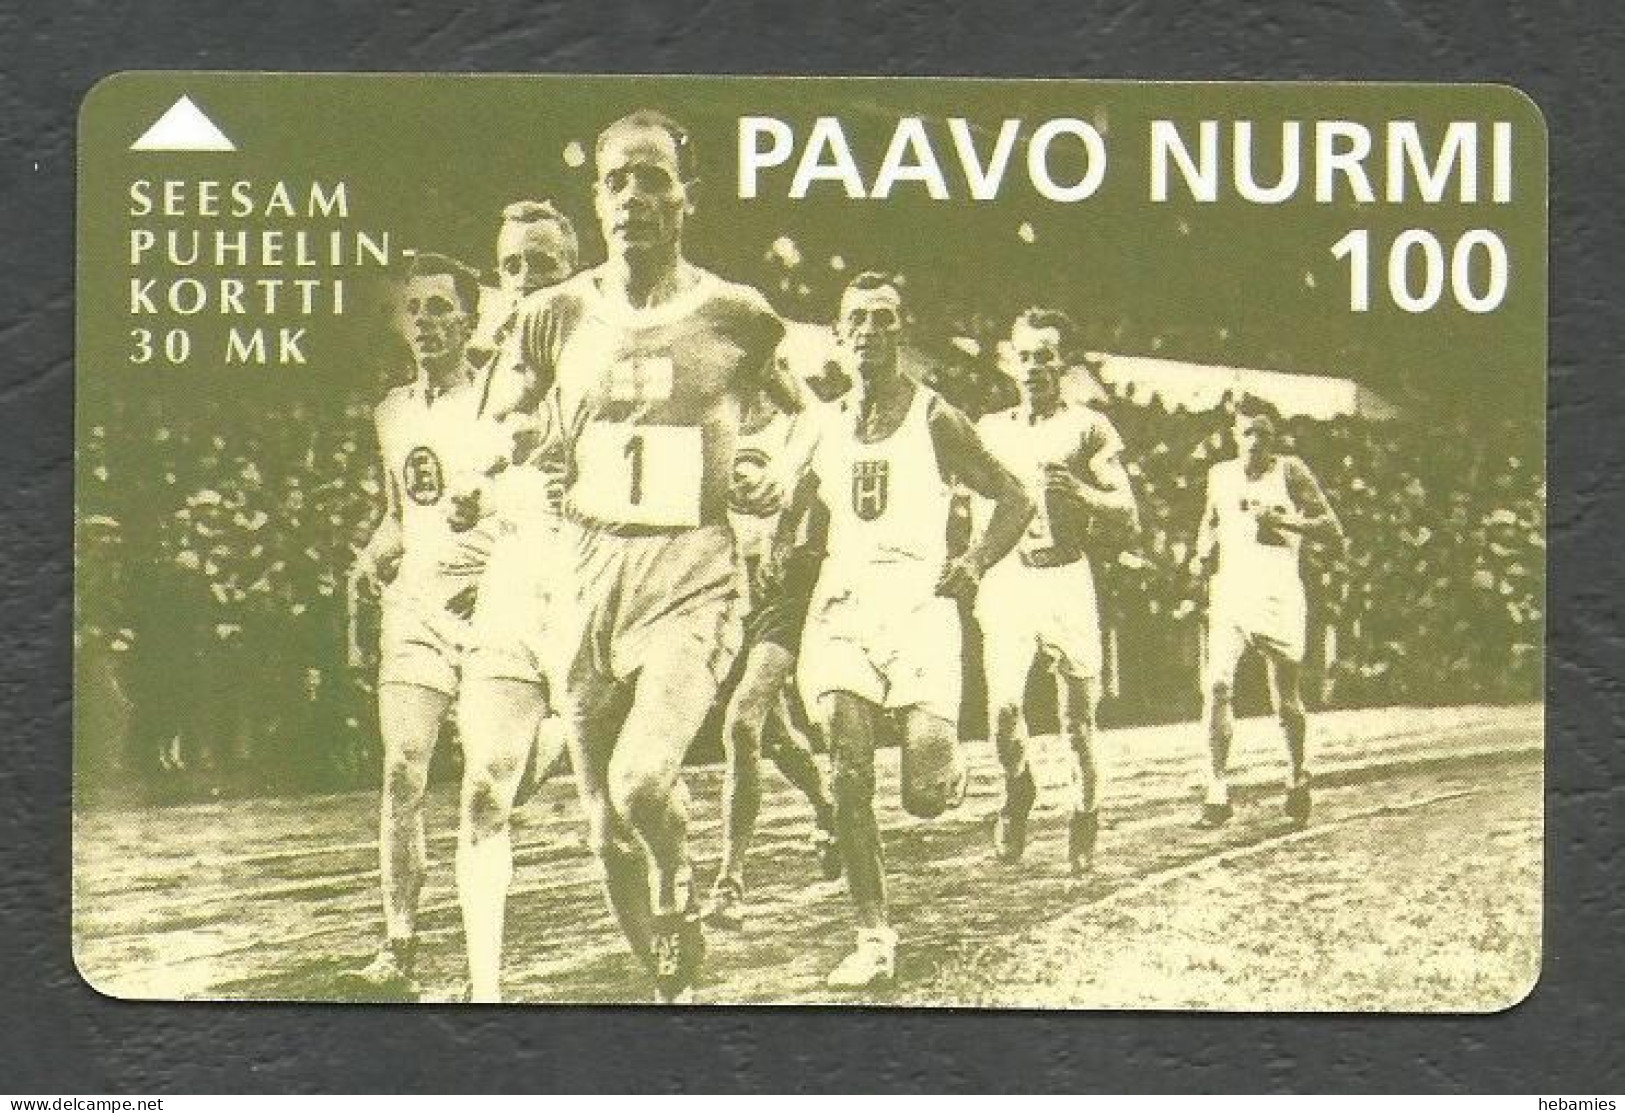 30 FIM  - PAAVO NURMI  - 9 Times Olympic Gold Medal Winner - Magnetic Card - FINLAND - - Sport